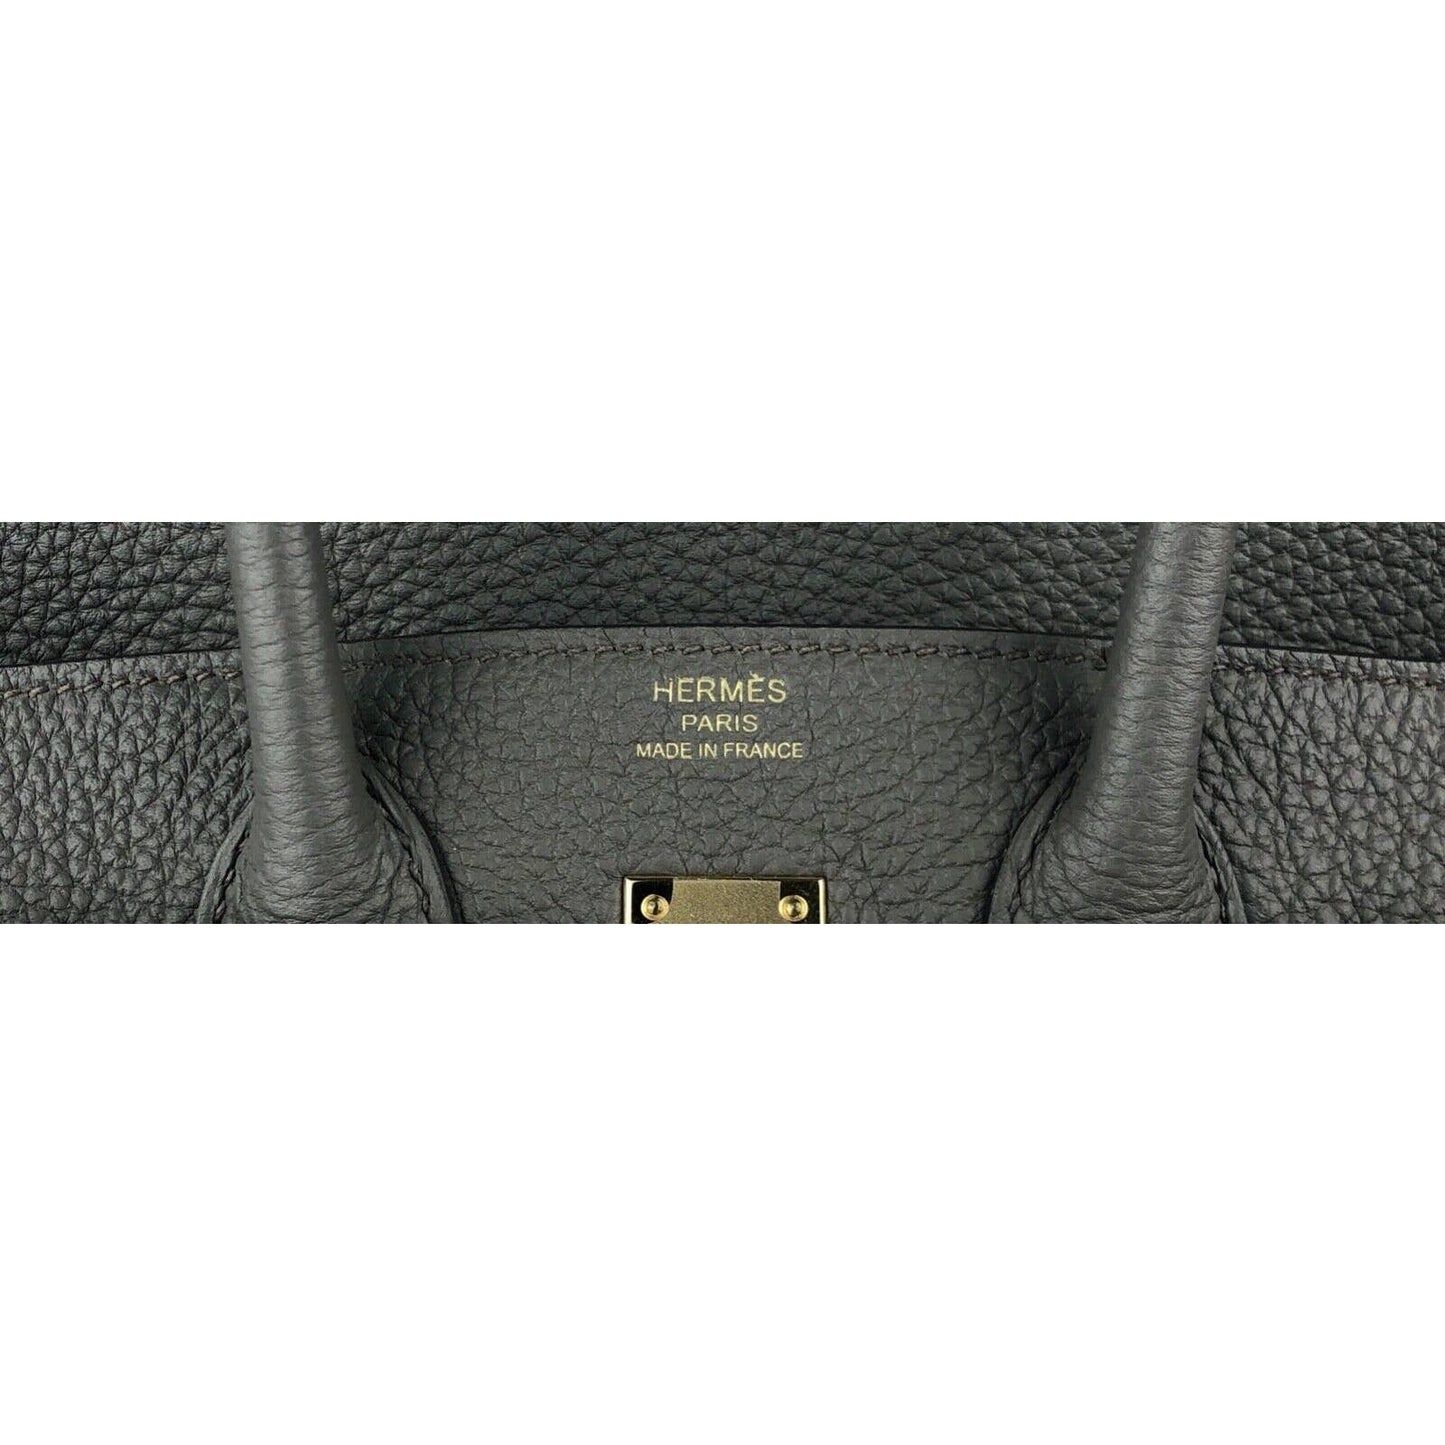 Hermes Birkin 25 Etain Gray Brown Grey Togo Leather Gold Hardware Handbag 2020